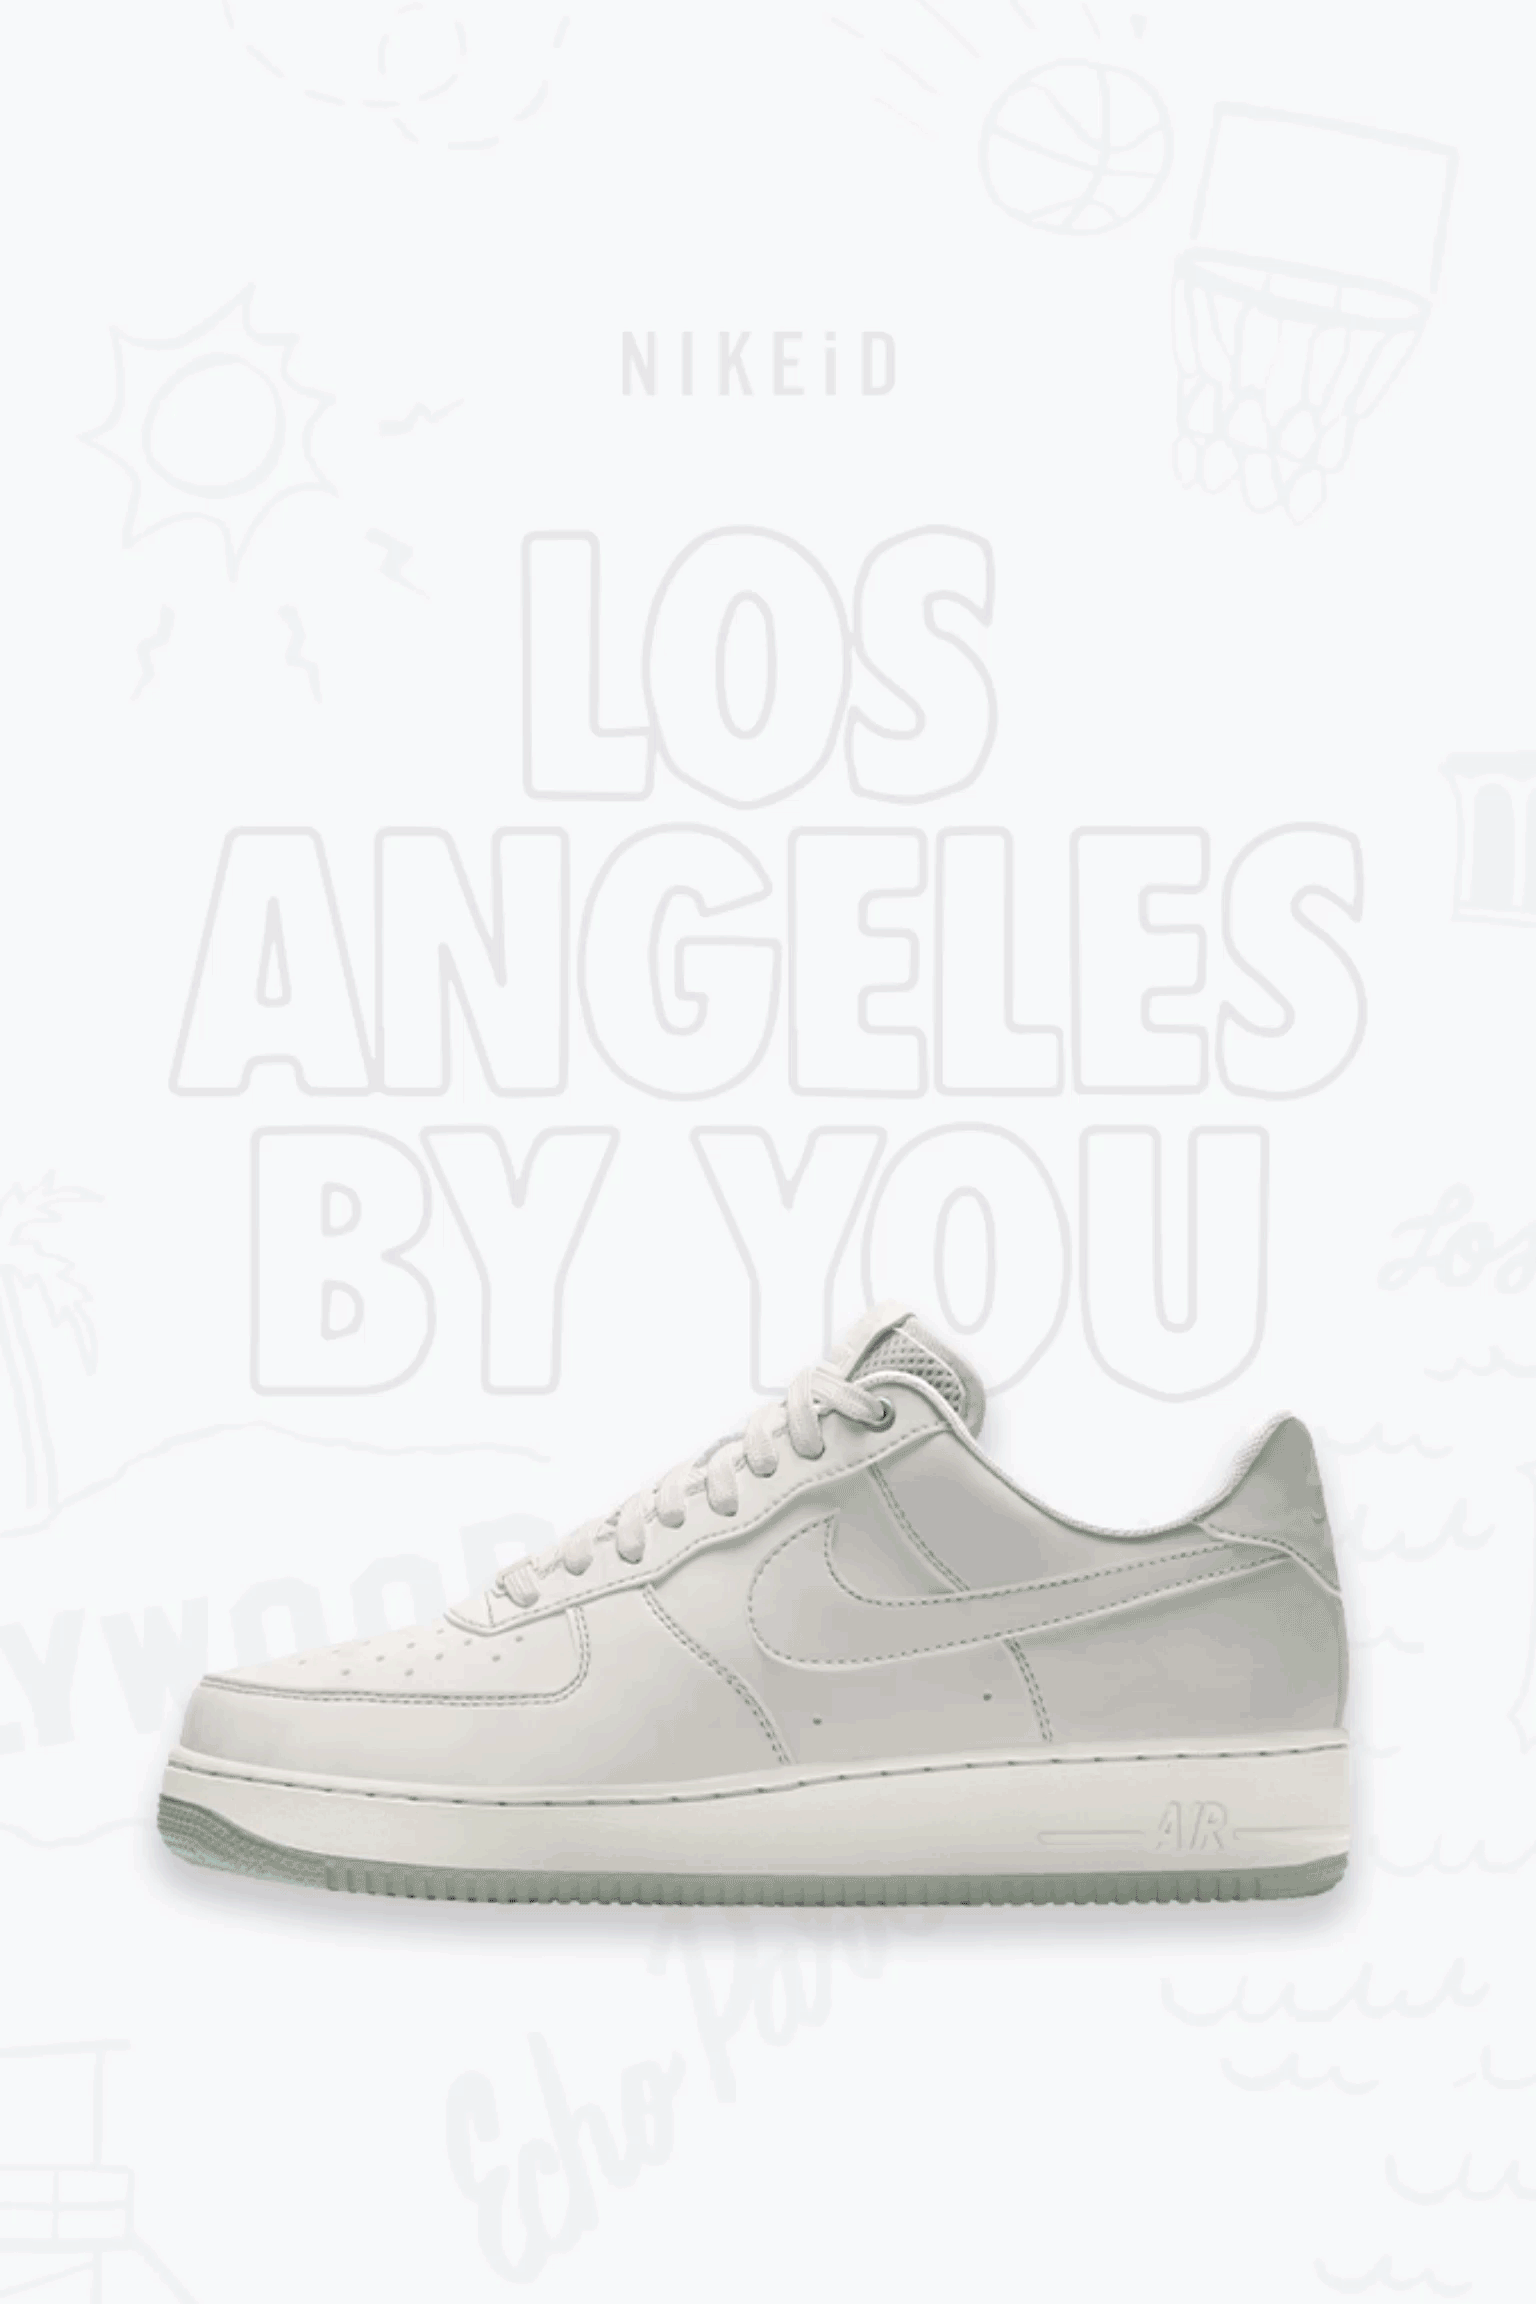 NIKE公式】ナイキ エア フォース 1 iD BY LOS ANGELES (AF1). Nike ...